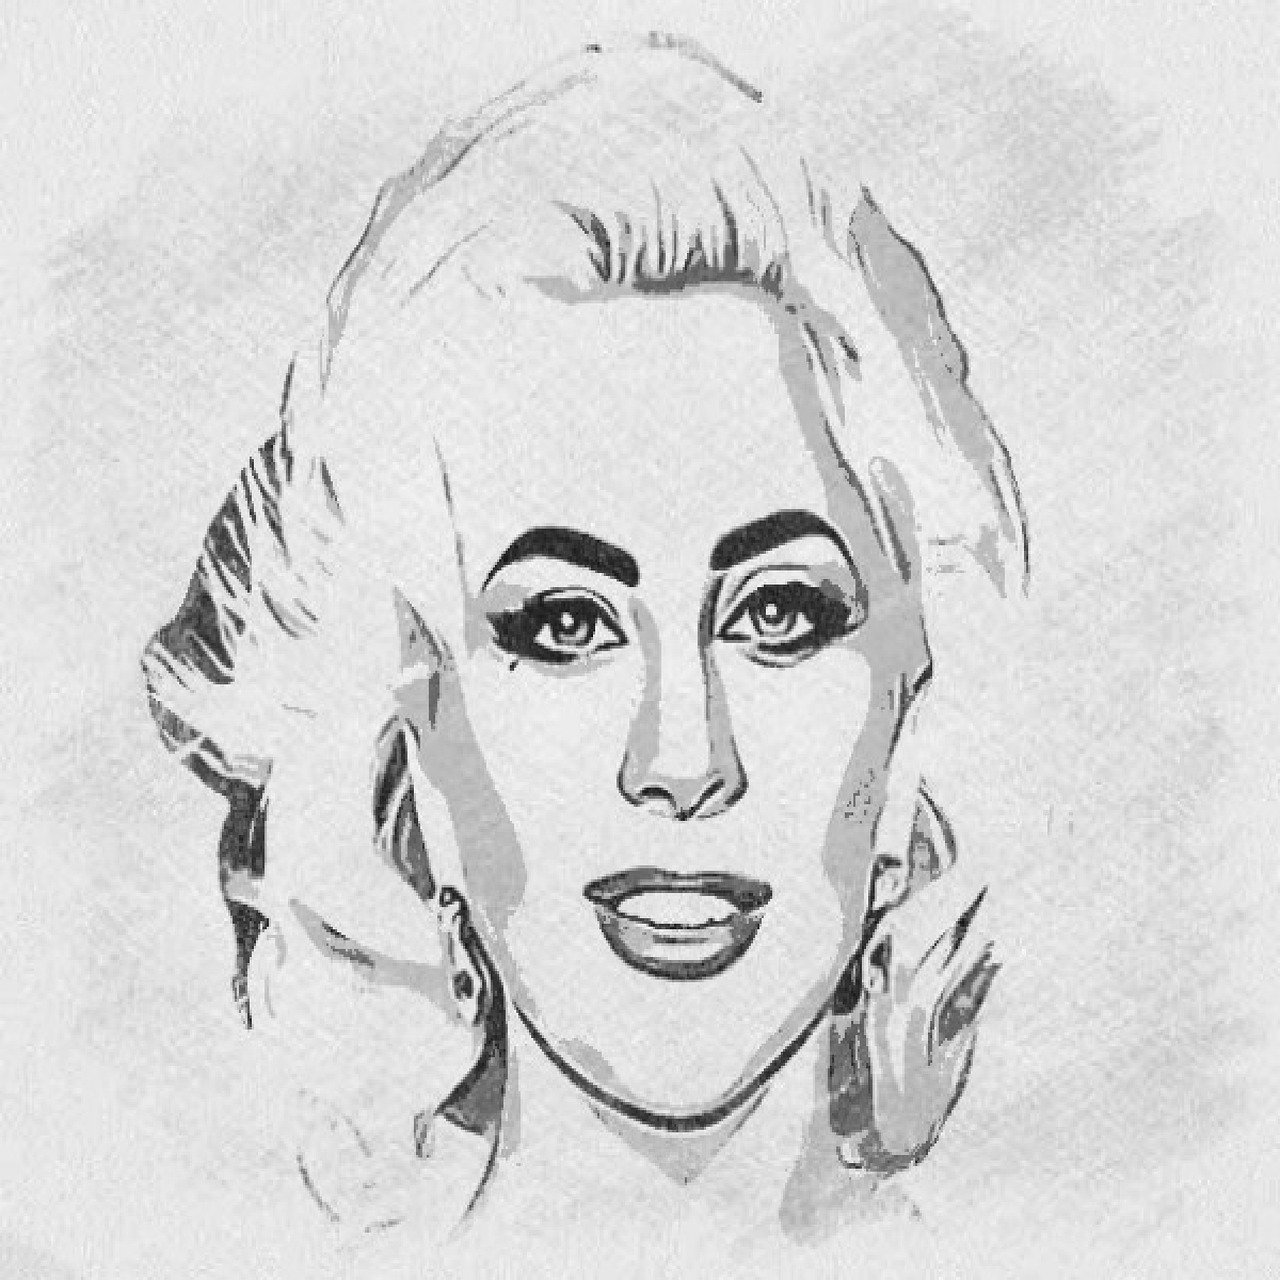 Biography of Lady Gaga